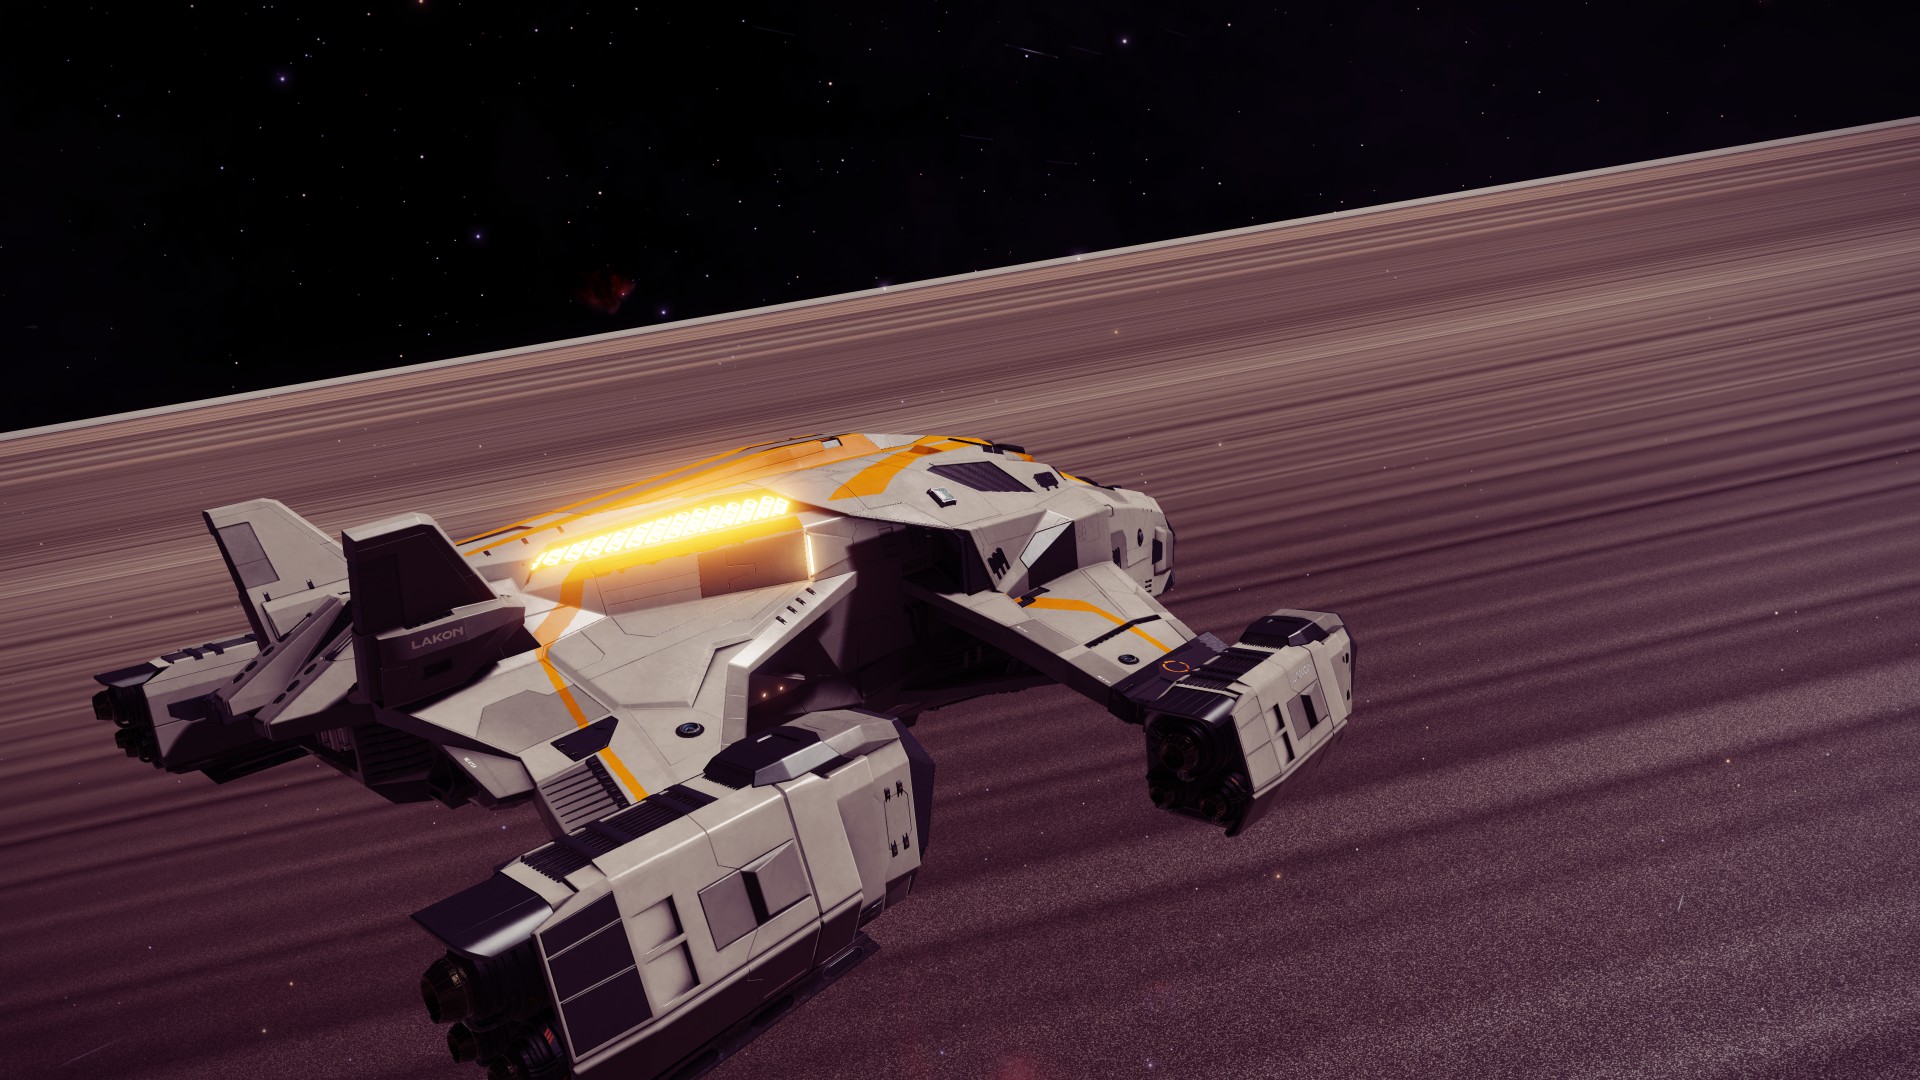 General 1920x1080 Elite: Dangerous PC gaming vehicle spaceship space science fiction screen shot